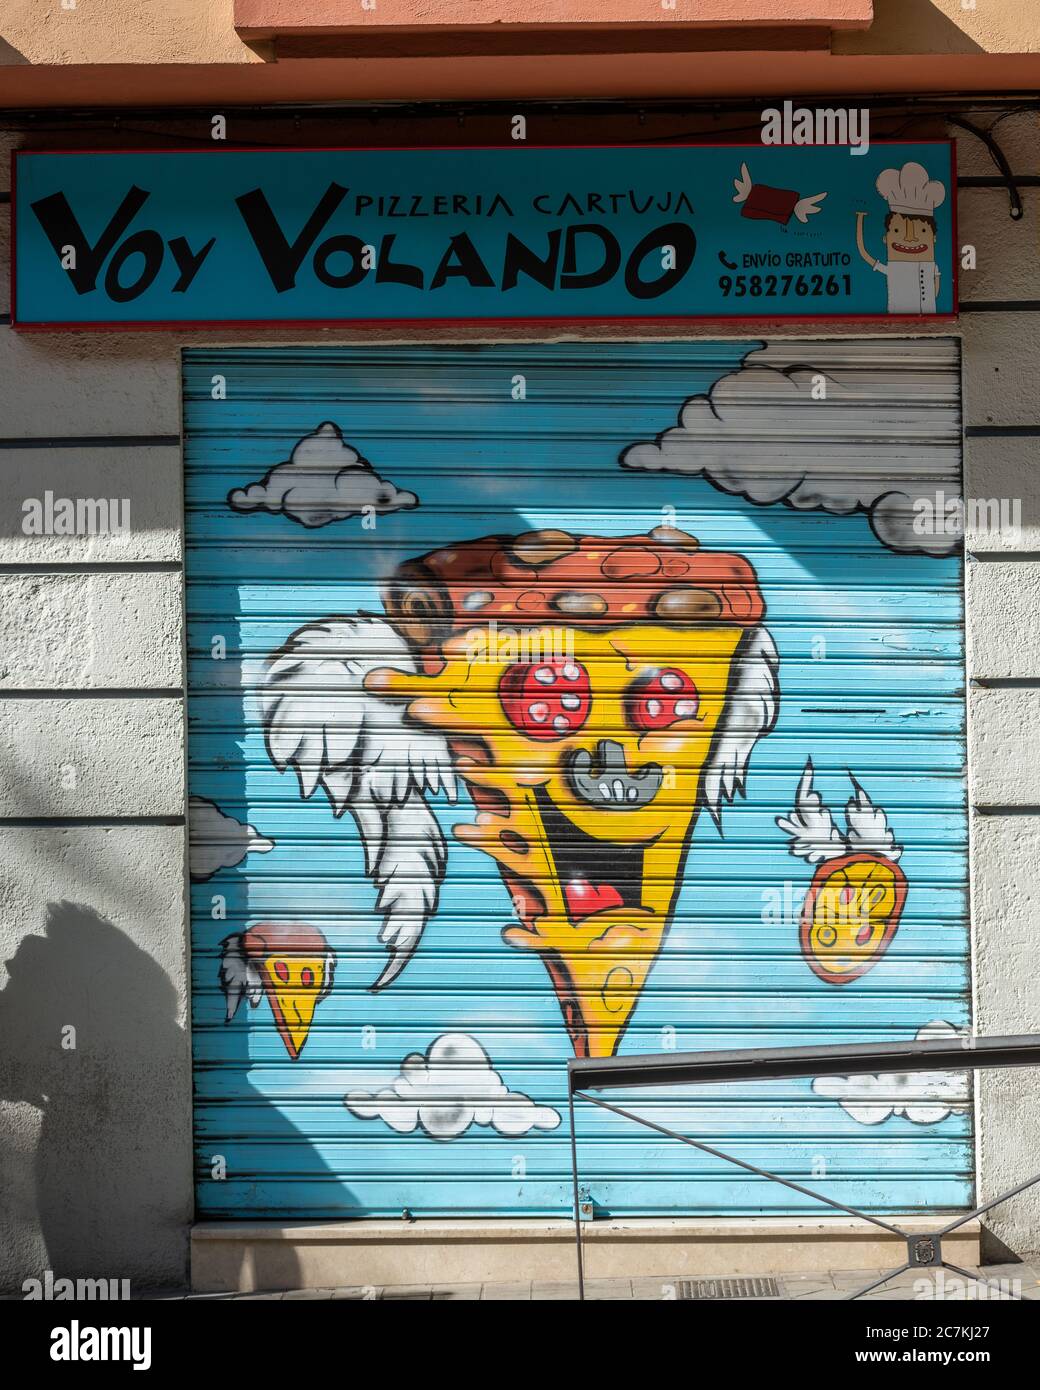 Une bande dessinée pizza-tranche de cherub visage annonce la pizzeria Voy Volando dans la Calle Real de Cartuja, Grenade Banque D'Images